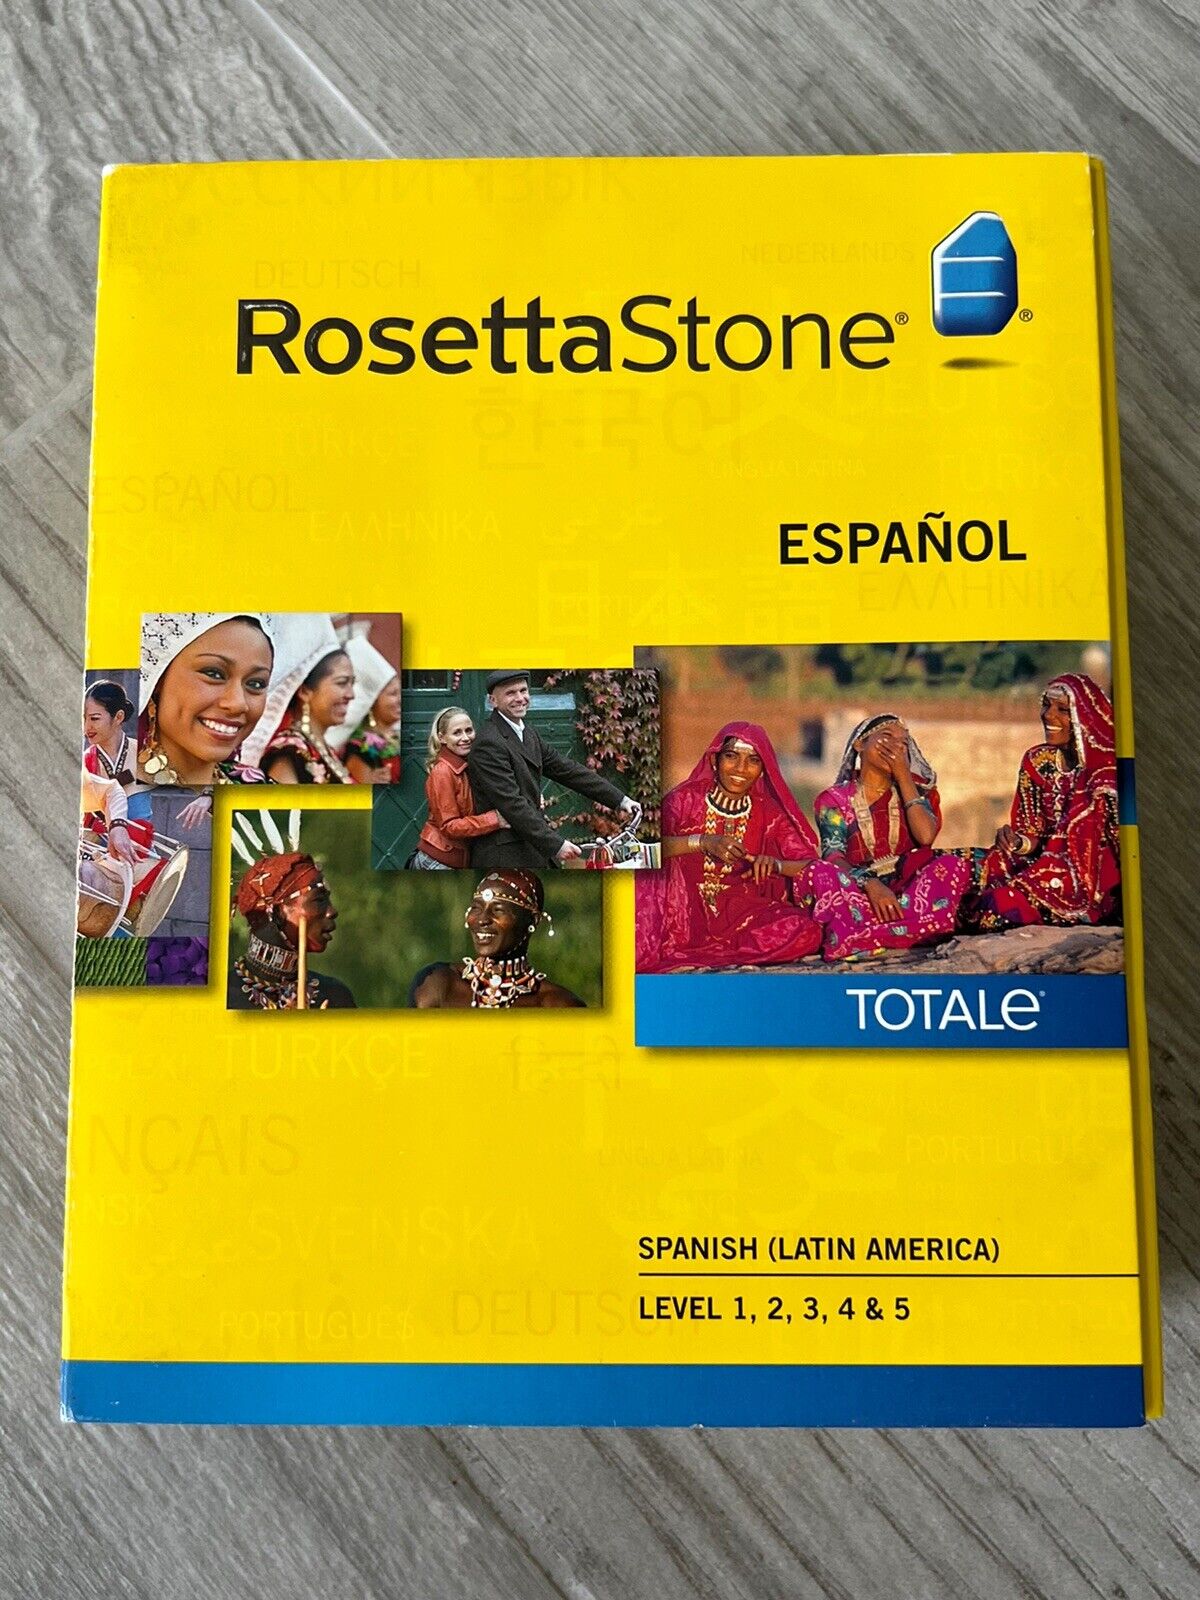 Rosetta Stone Spanish  (Latin America) Version 4 Level 1-5 Español Excellent